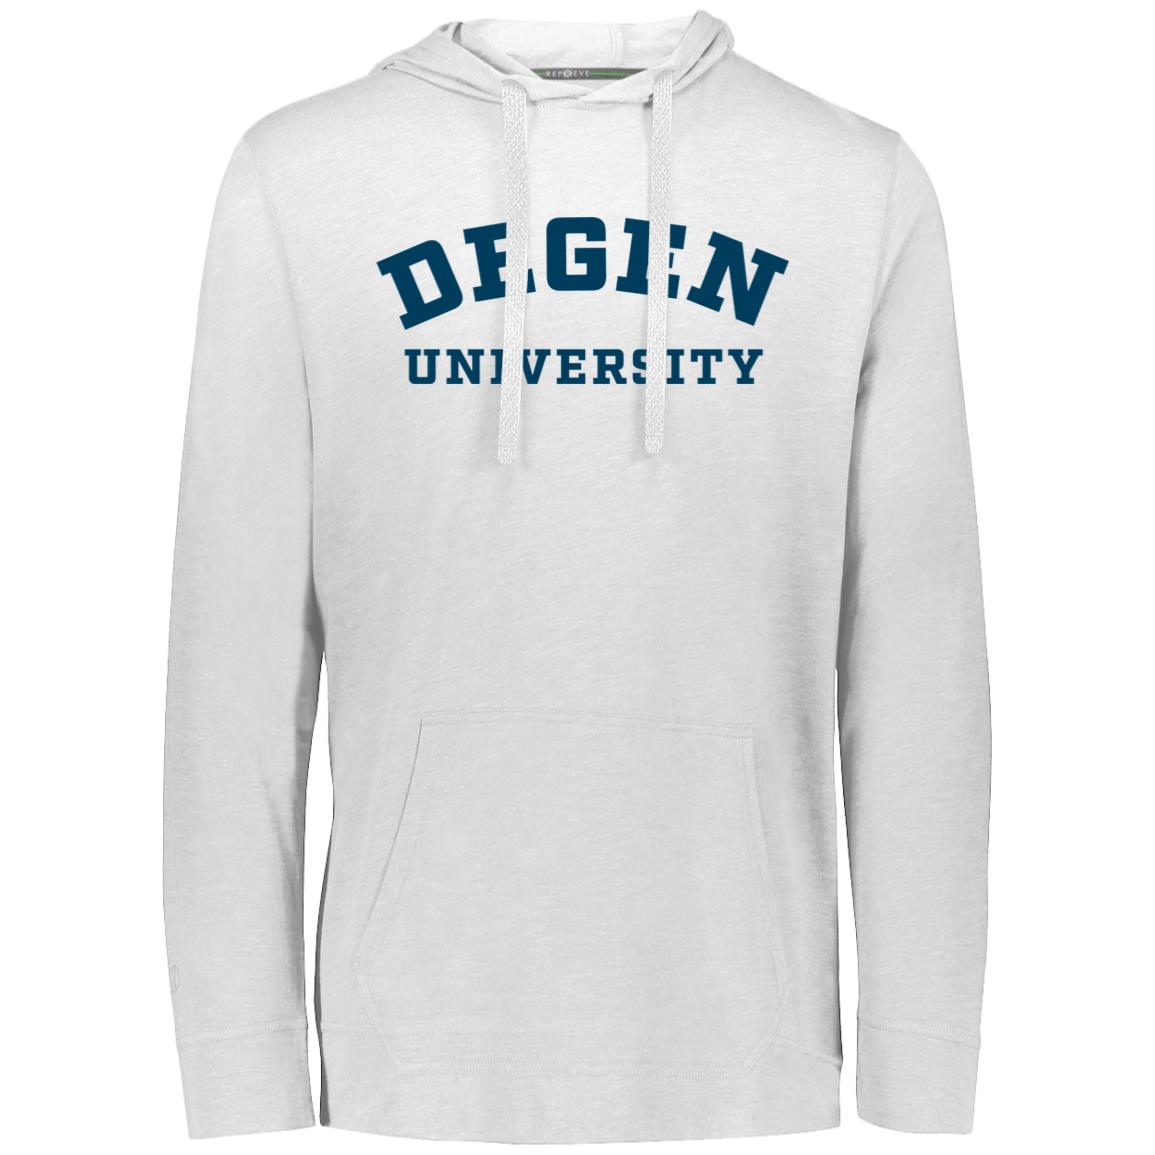 Degen University - Eco Triblend T-Shirt Hoodie